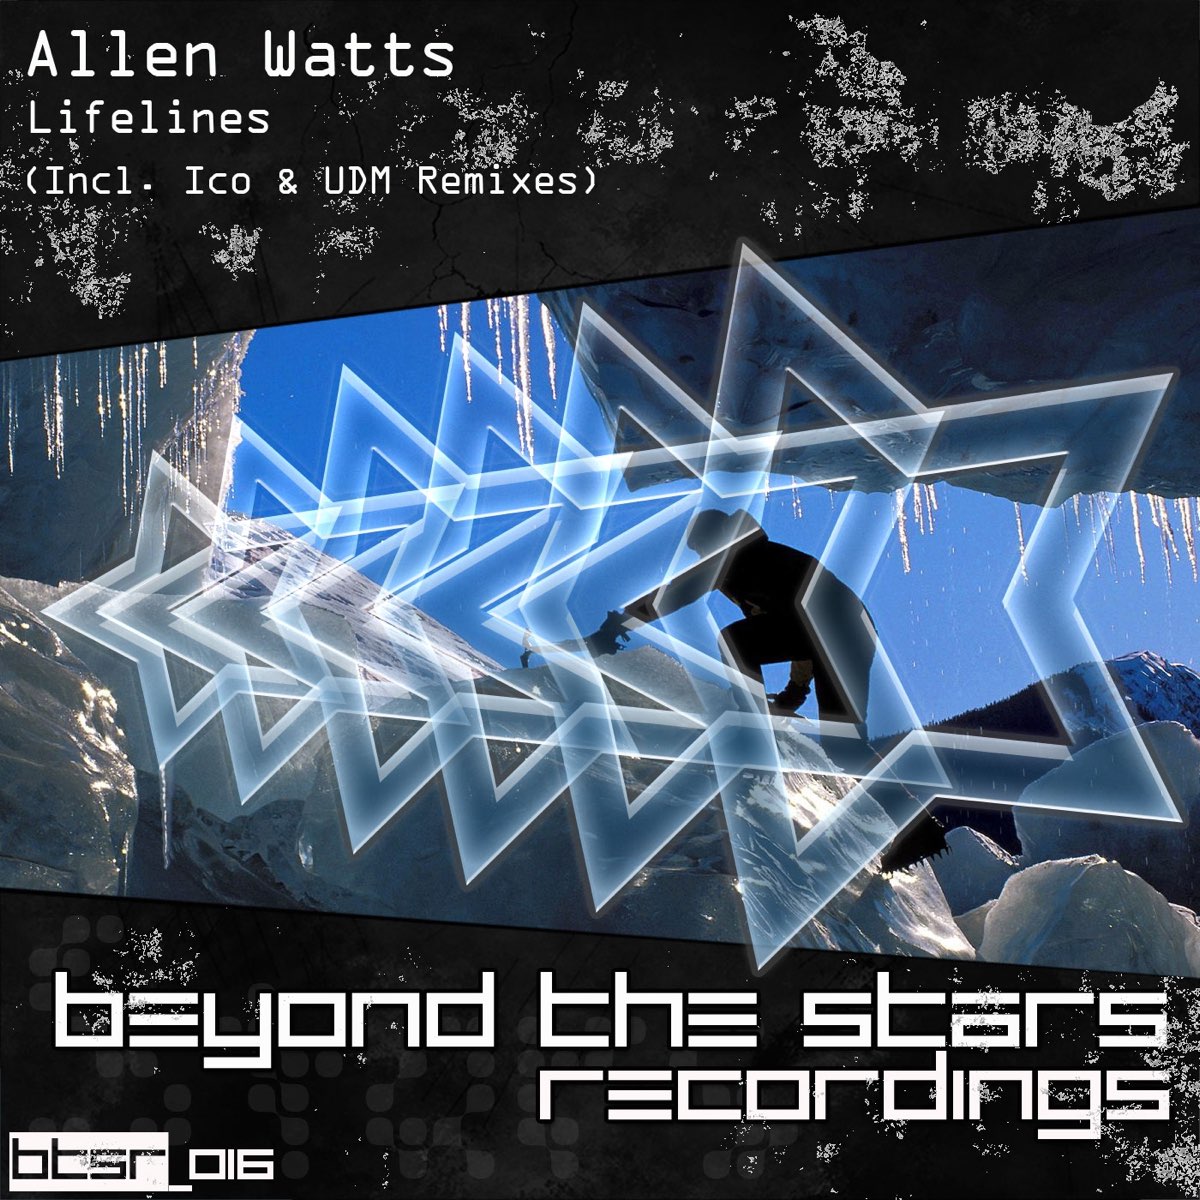 Allen watts. Lifelines (ICO Remix) Allen Watts. Allen Watts Uplifting Trance. Фото альбома Lifelines. Allen Watts выступления на шоу.